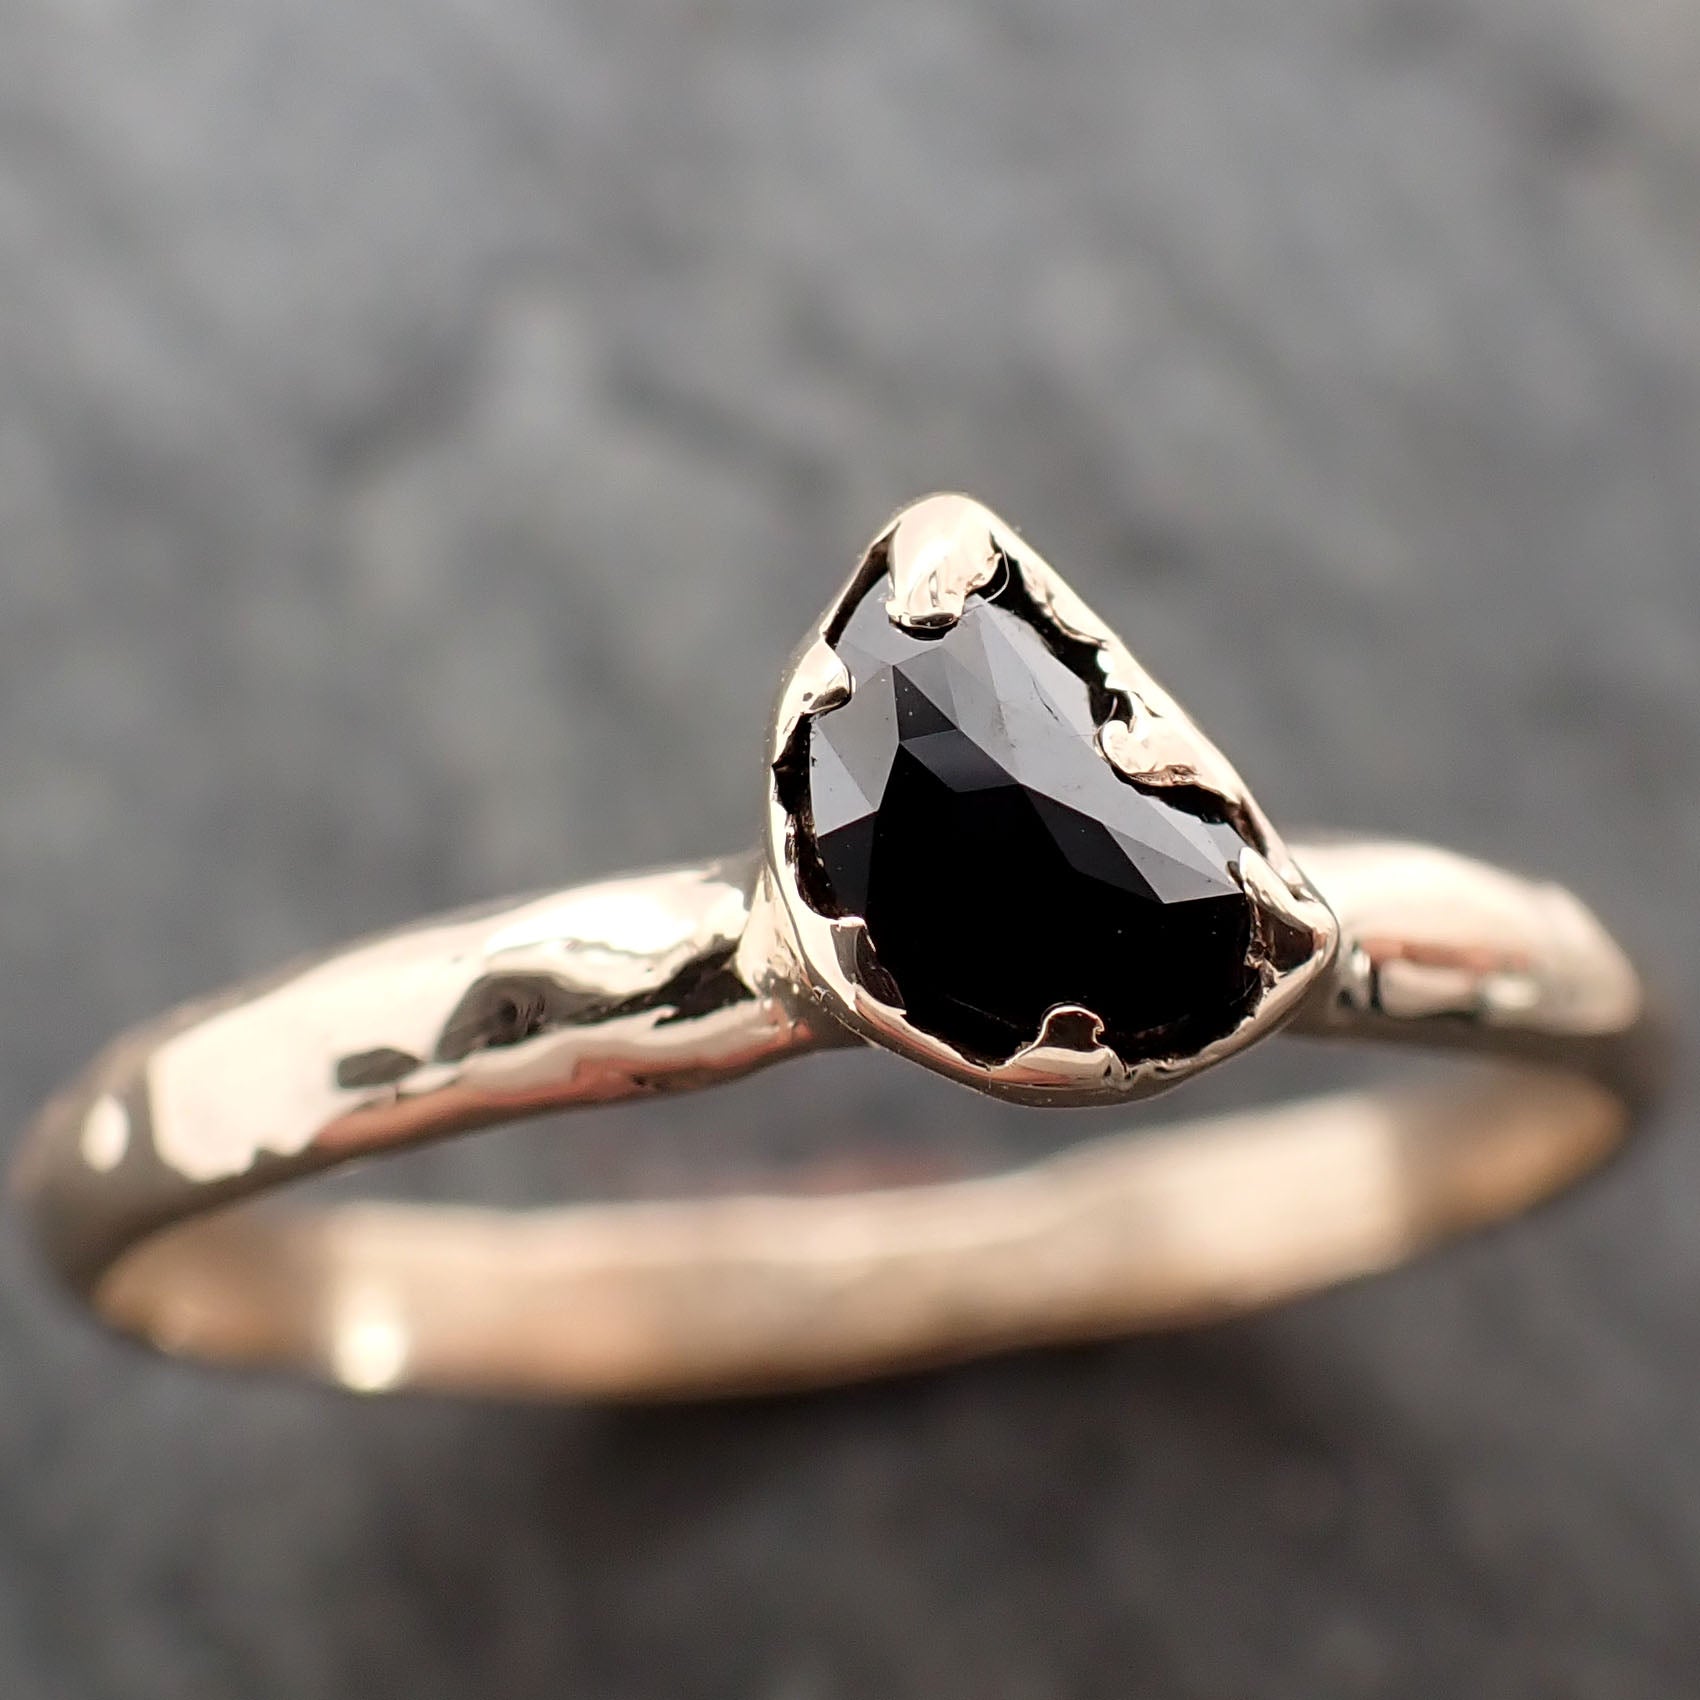 Fancy cut black Half moon Diamond Engagement 14k yellow Gold Solitaire Wedding Ring byAngeline 2856